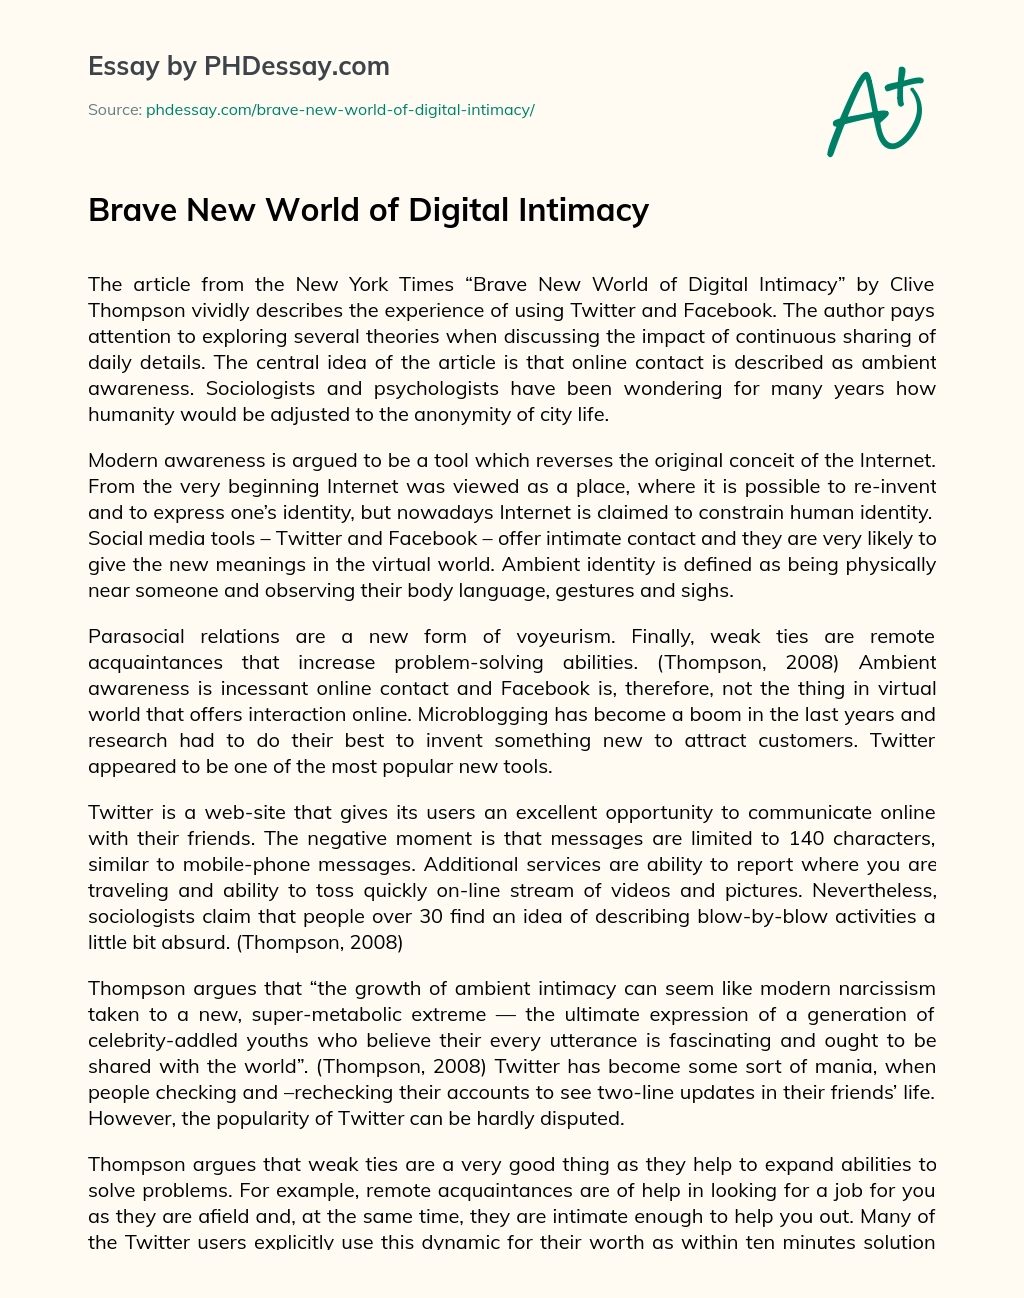 Brave New World of Digital Intimacy essay